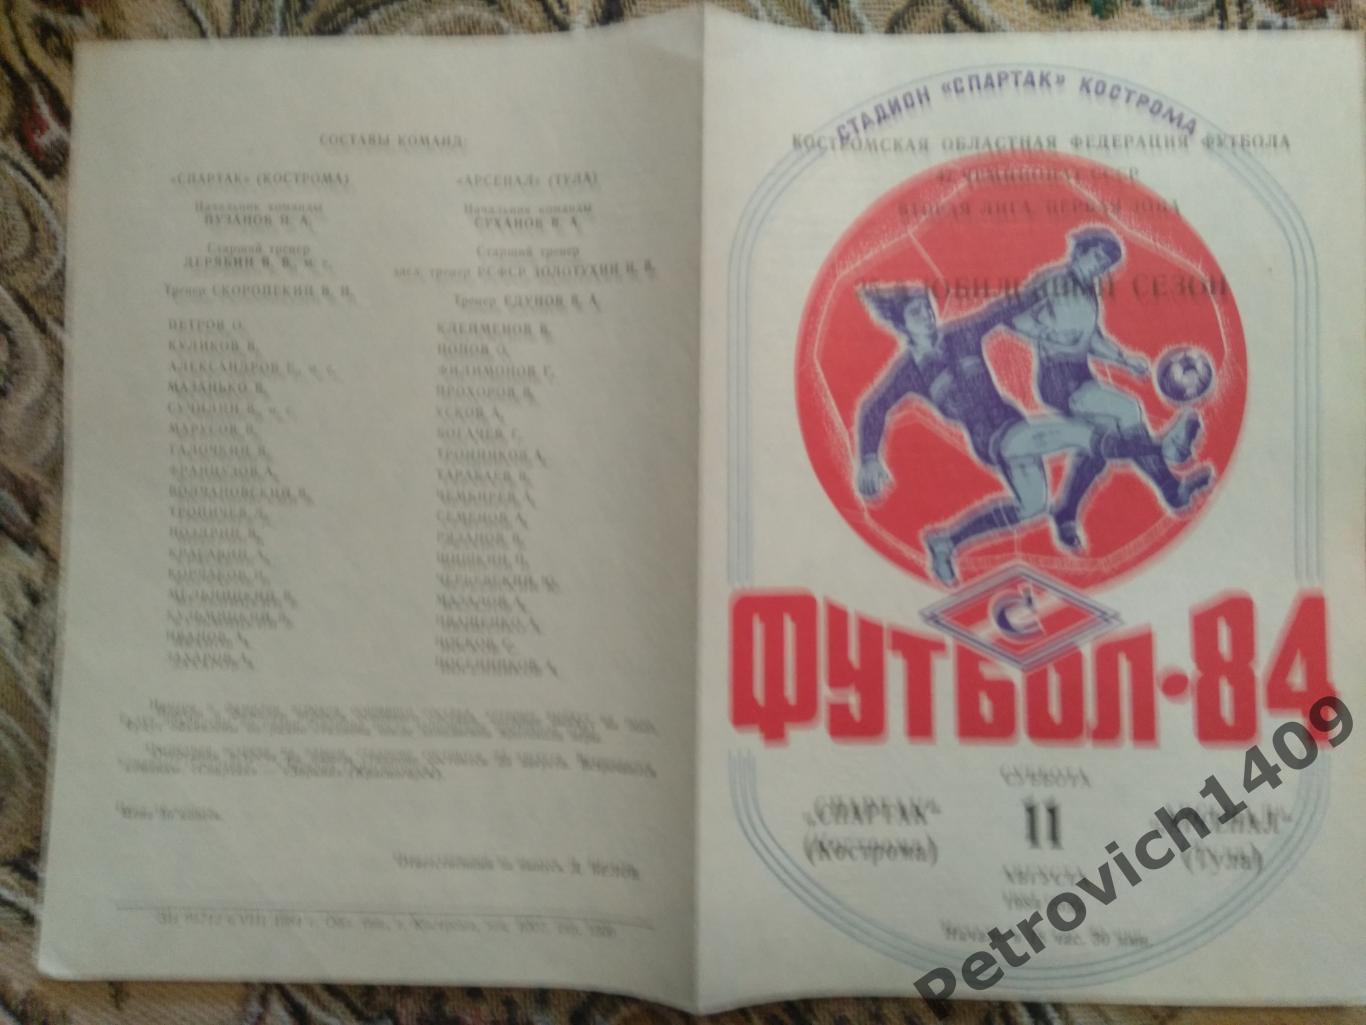 Спартак Кострома - Арсенал Тула 11 августа 1984 год